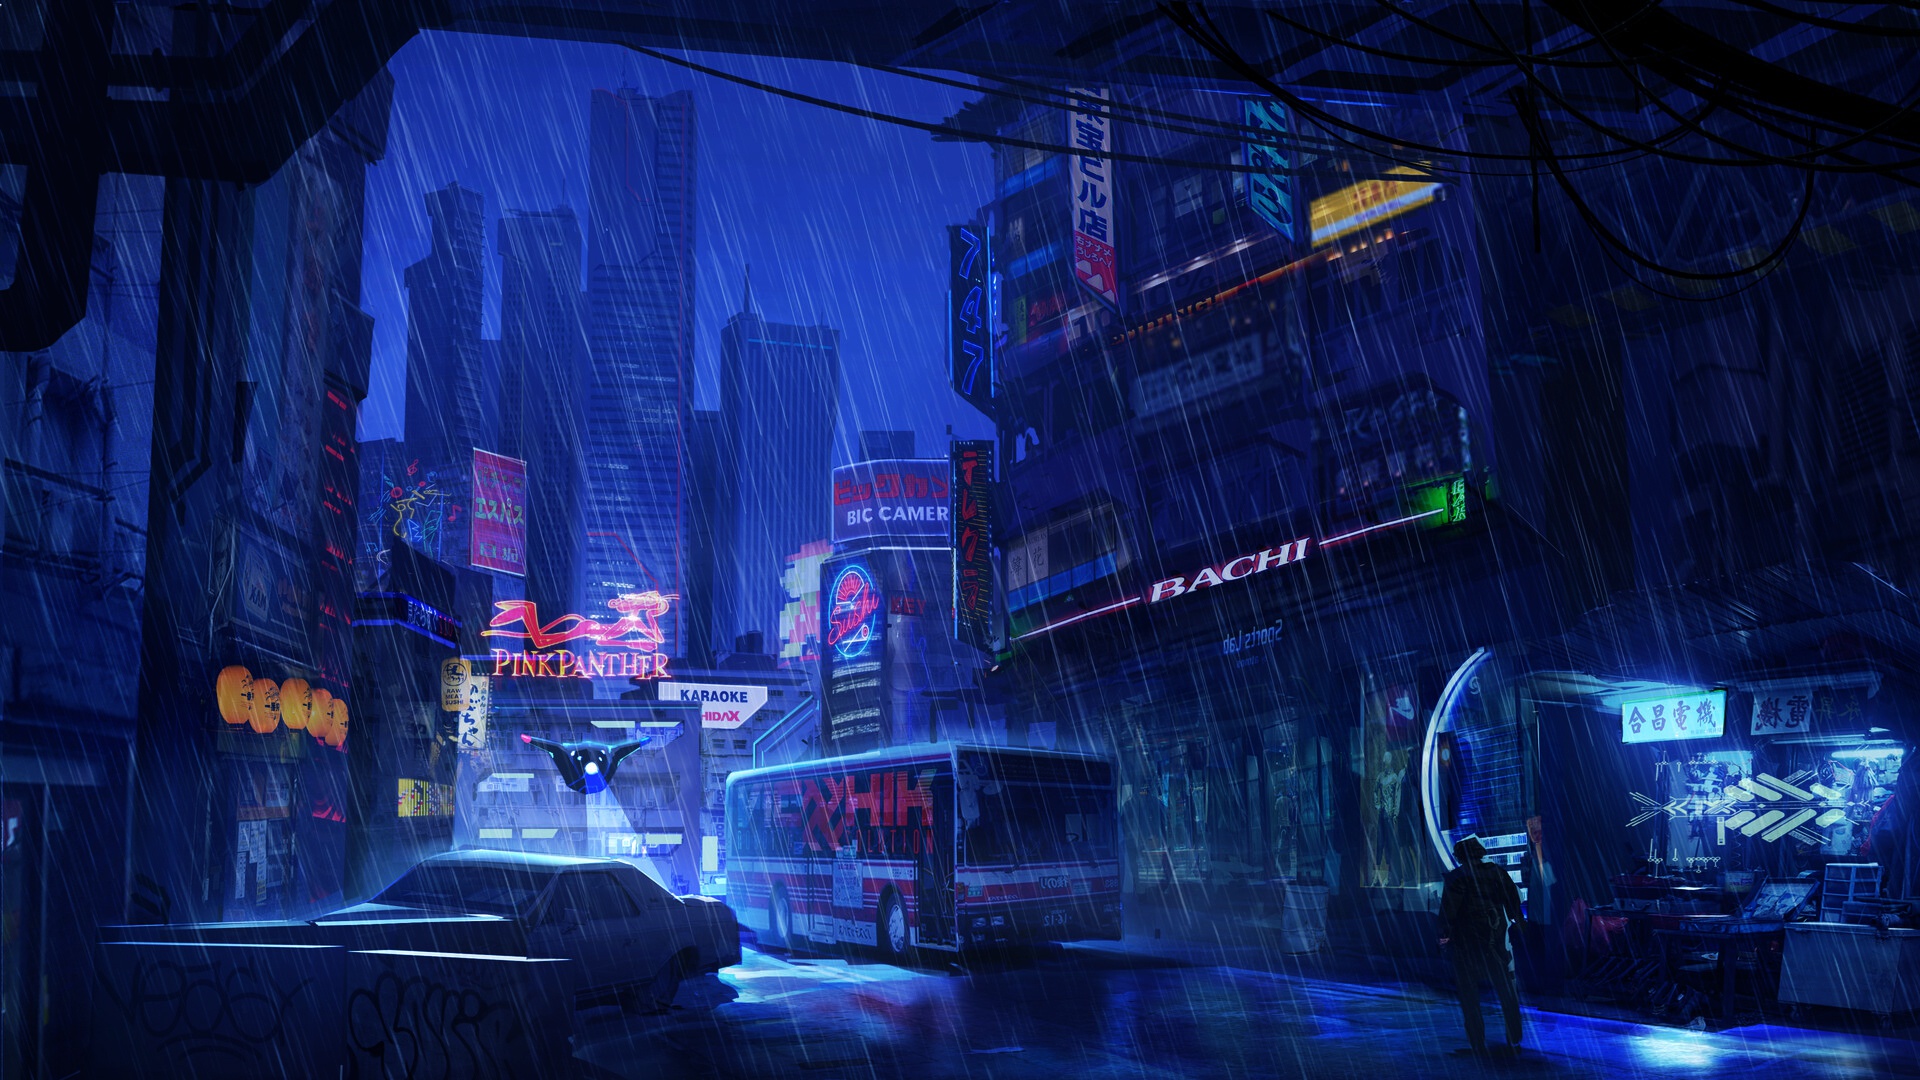 Sci Fi Cyberpunk Art by XiXin Guo